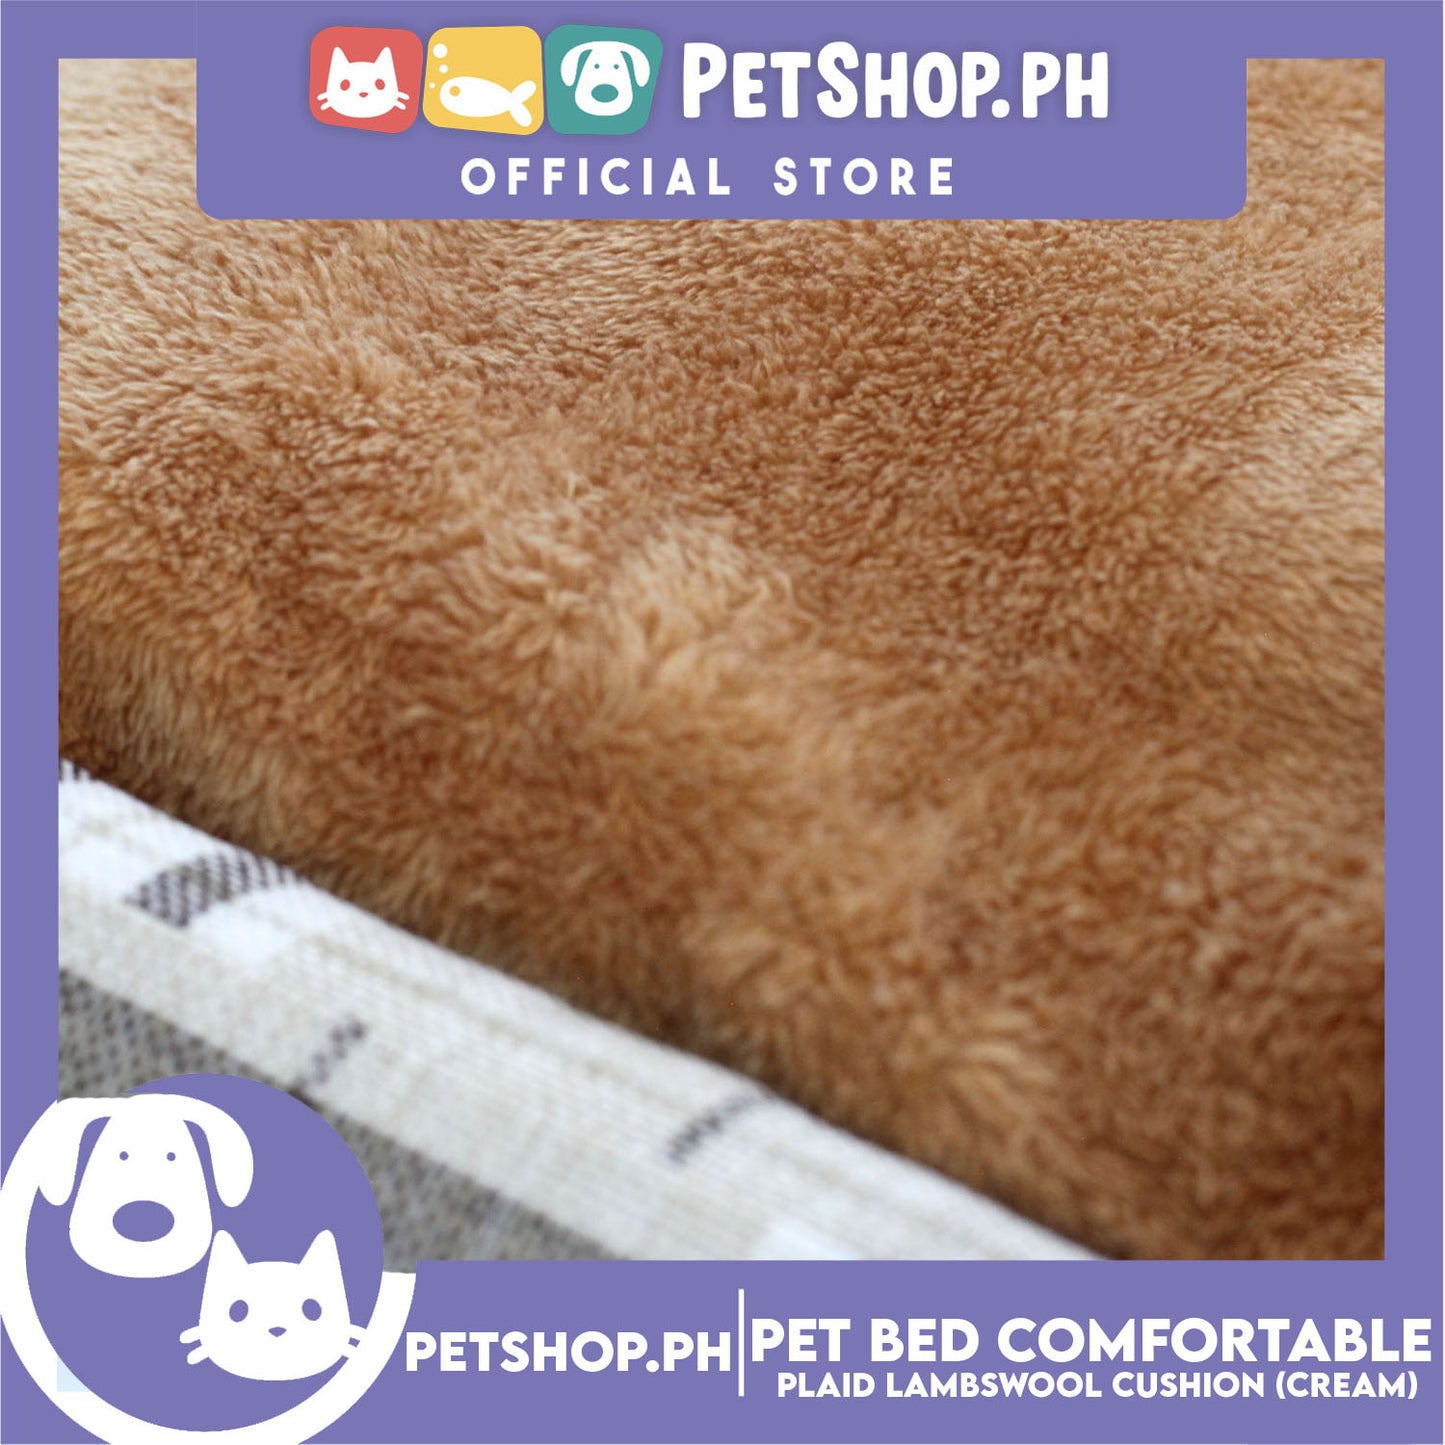 Pet Bed Comfortable Sleeping Bed Plaid Cotton Design with Lambswool Cushion 62x45x12cm Medium (Cream